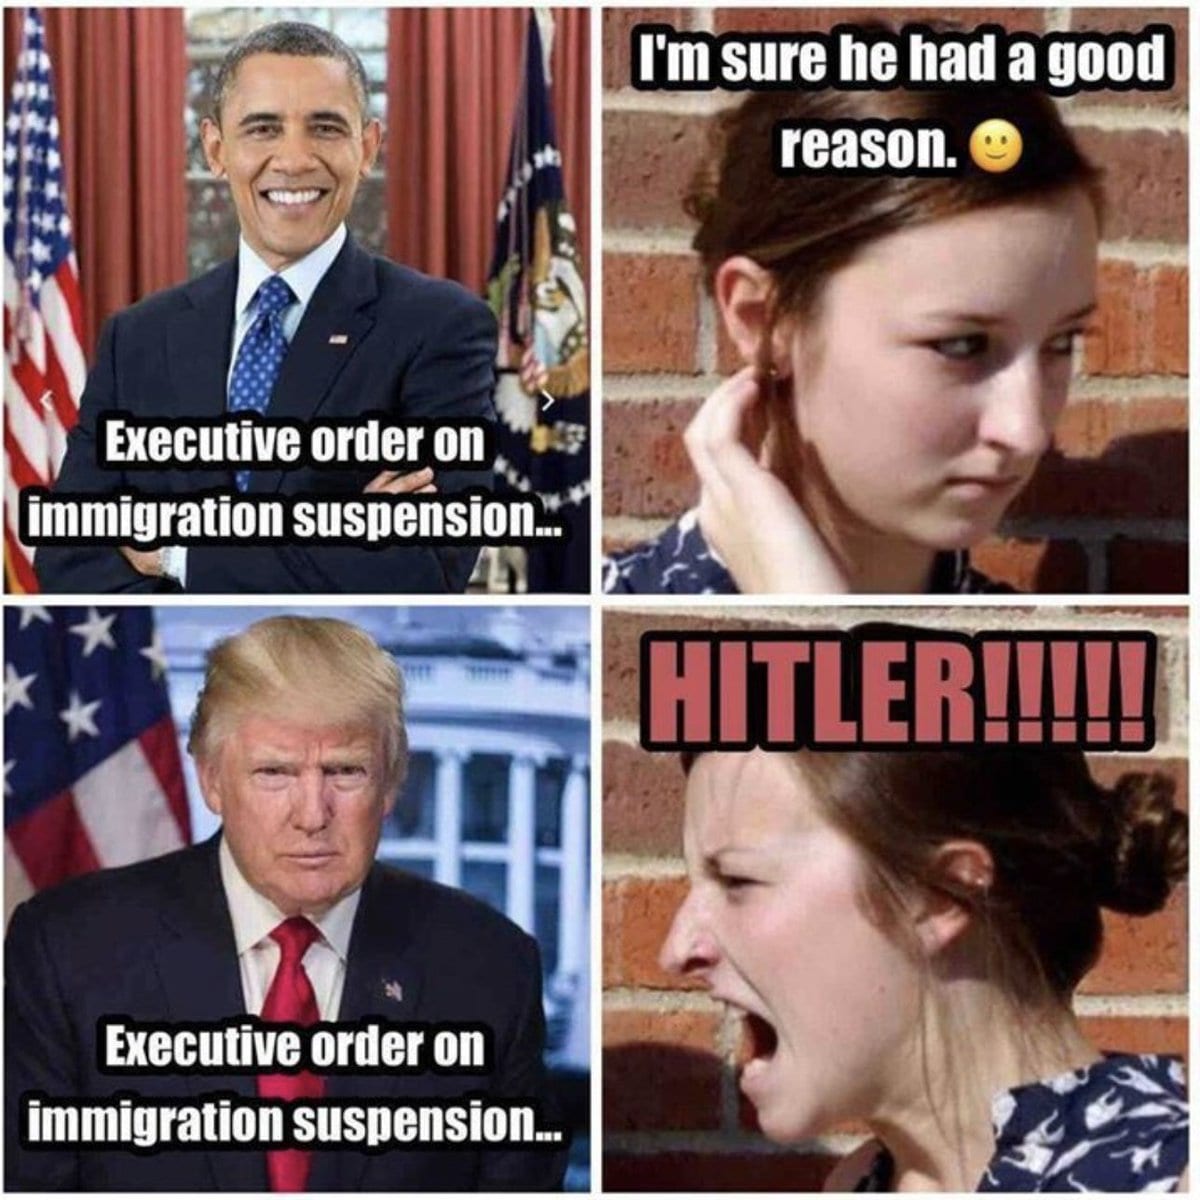 Obama v Trump XO on immigration